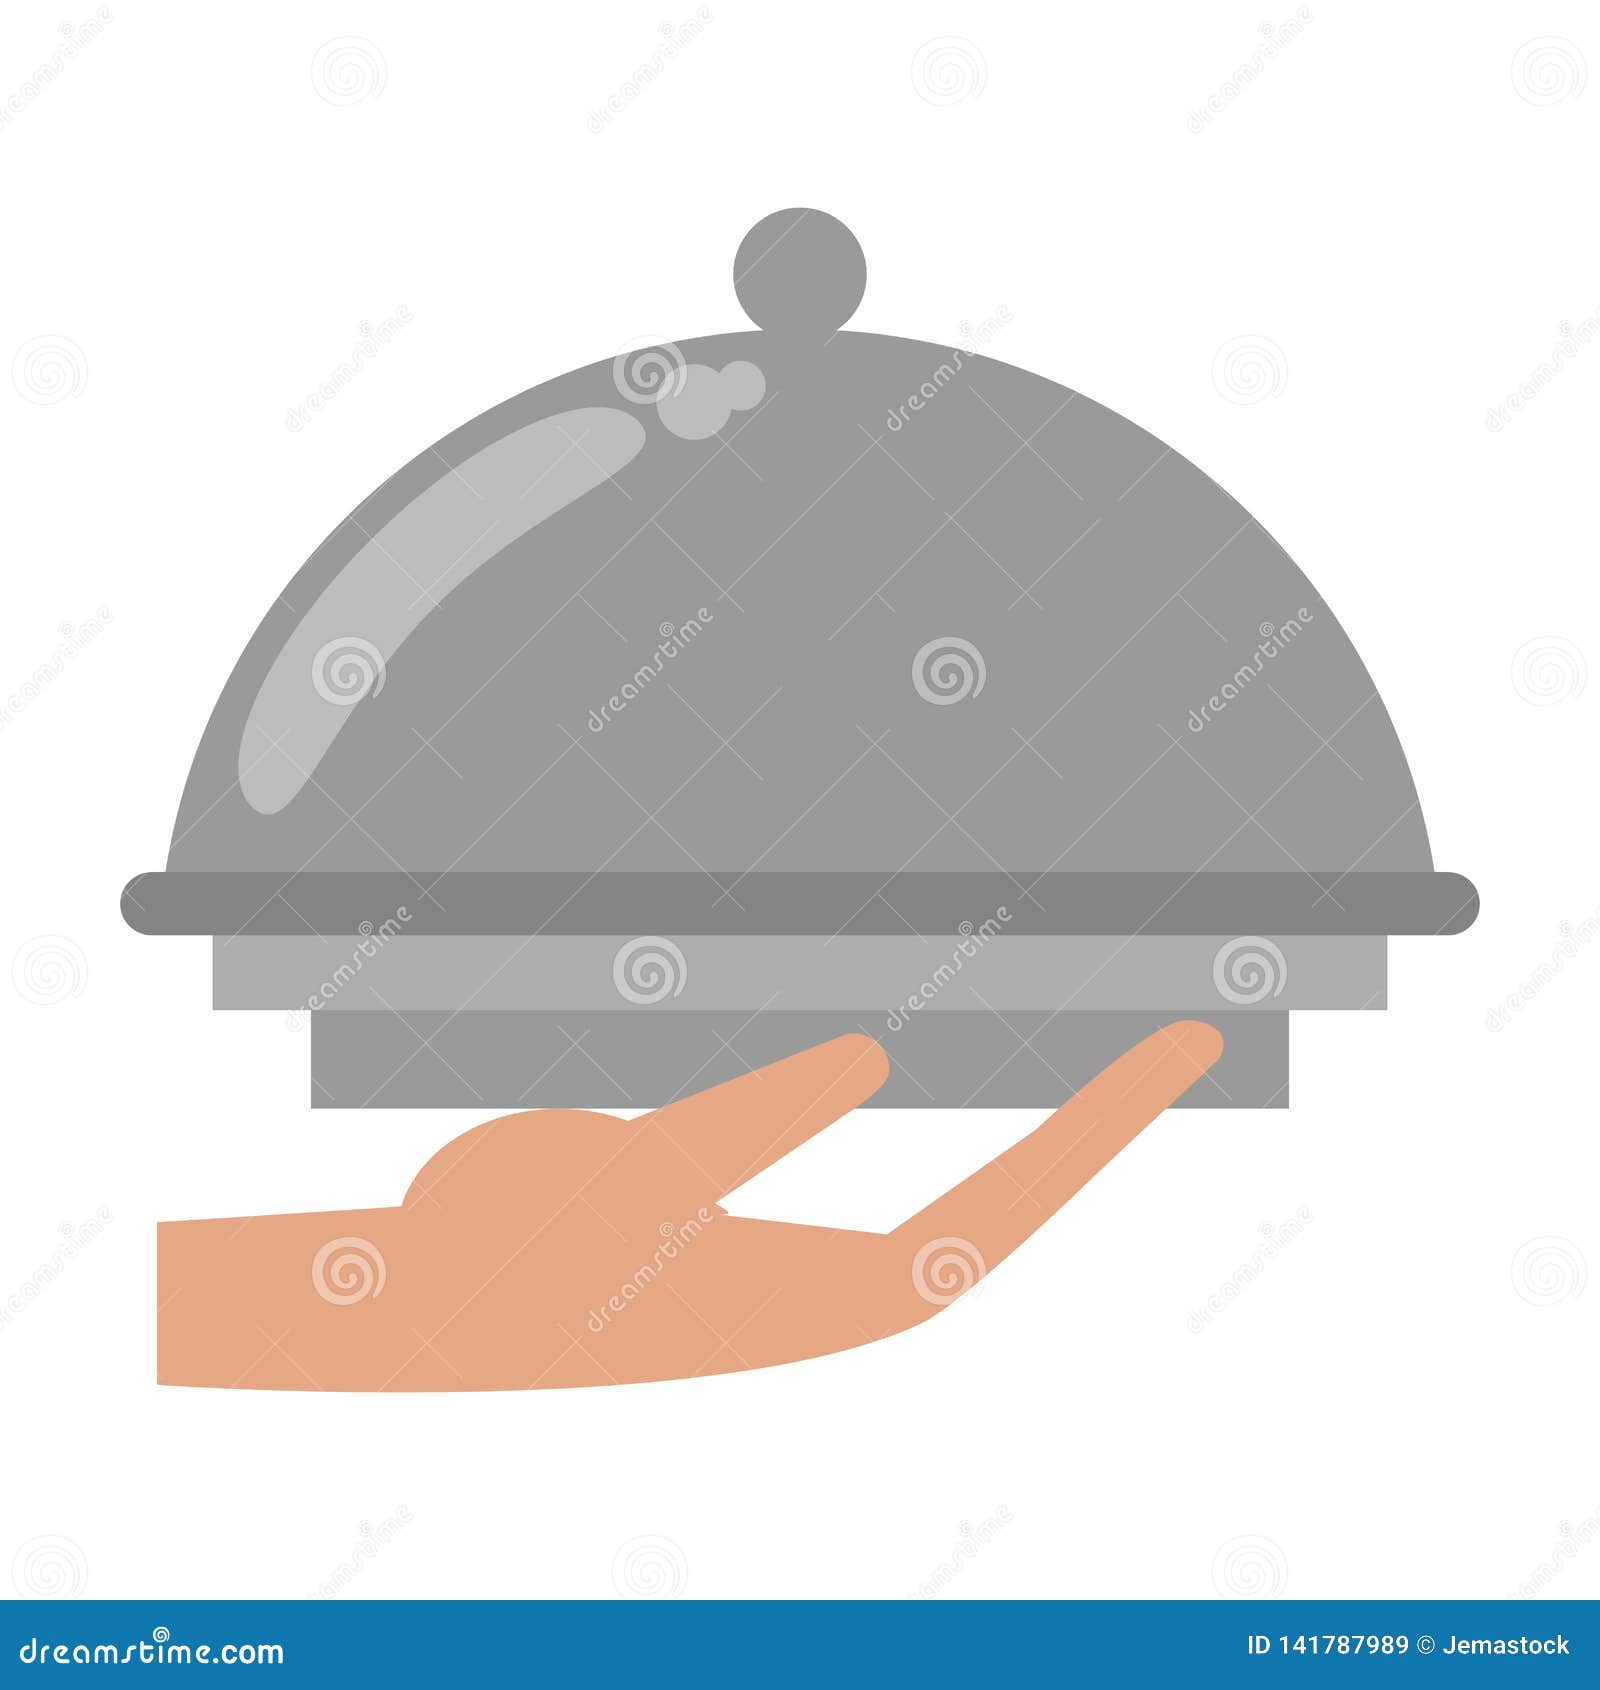 hand holding restaurante bell dome